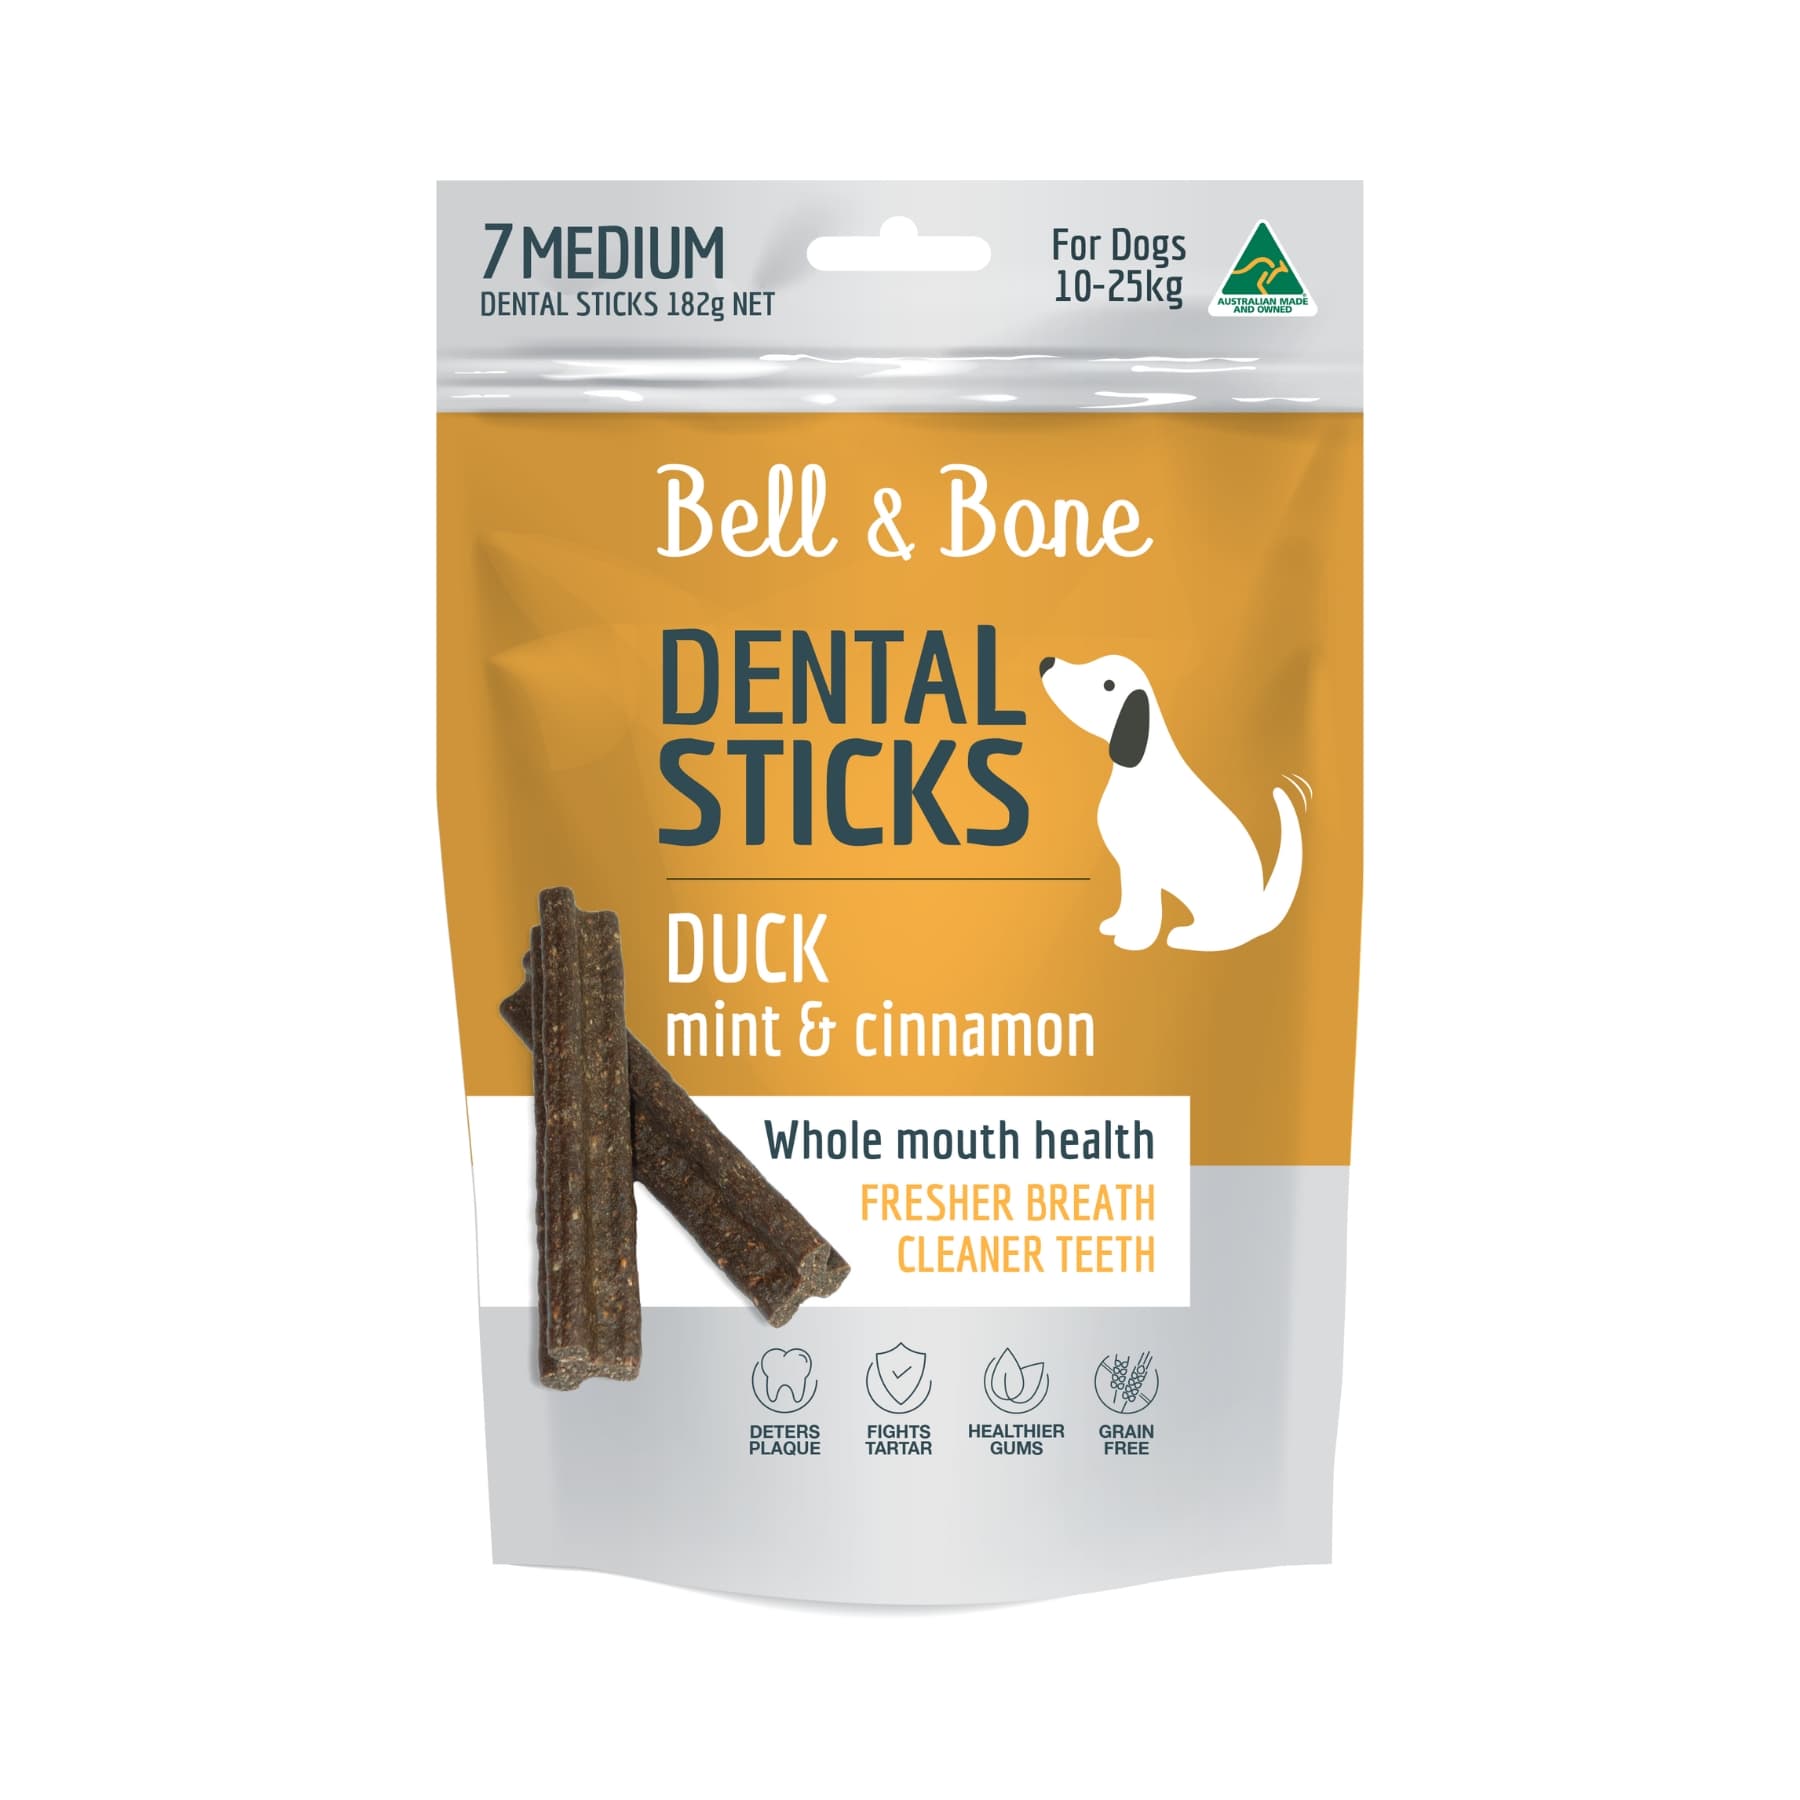 Bell & Bone Dental Sticks Duck, Mint & Cinnamon - Medium. Australian Made Dental Treats for Dogs.